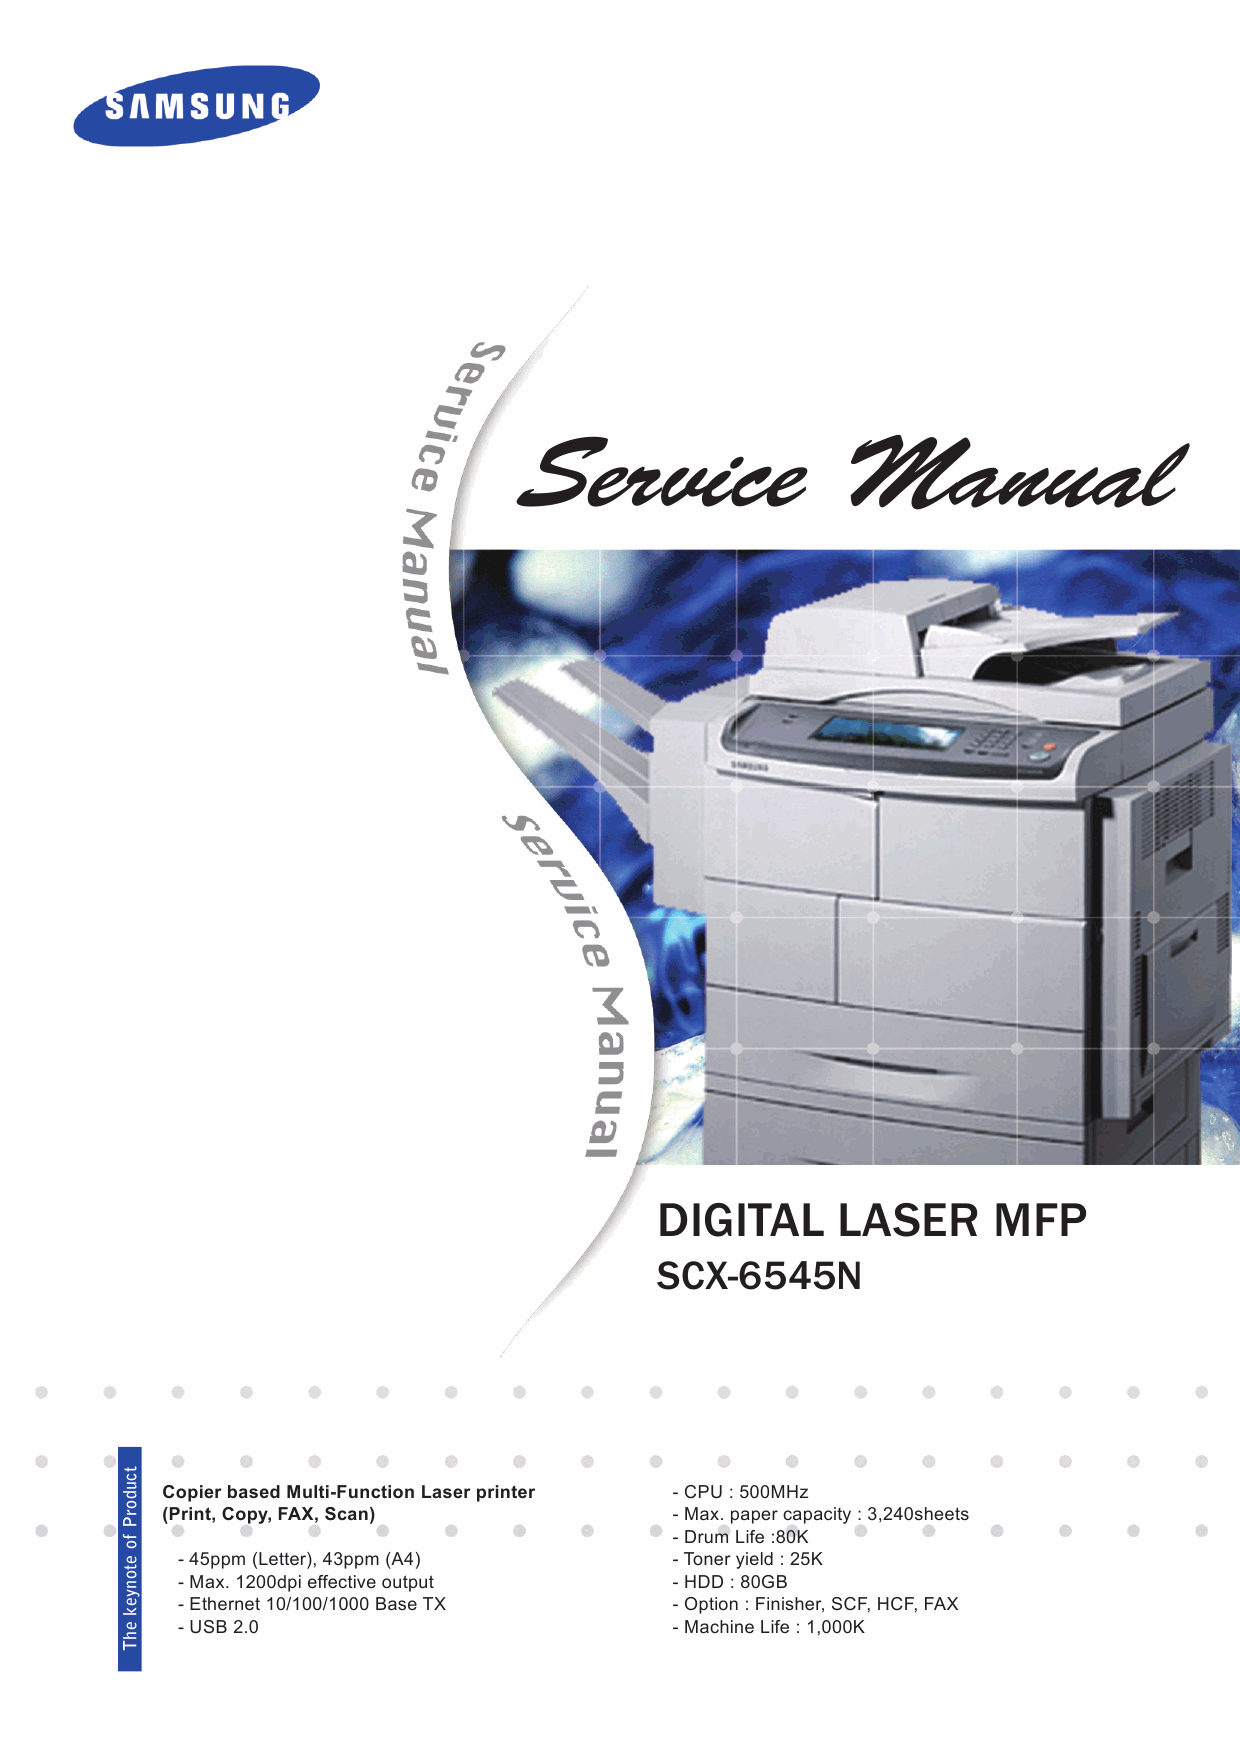 Samsung Digital-Laser-MFP SCX-6545N Parts and Service Manual-1